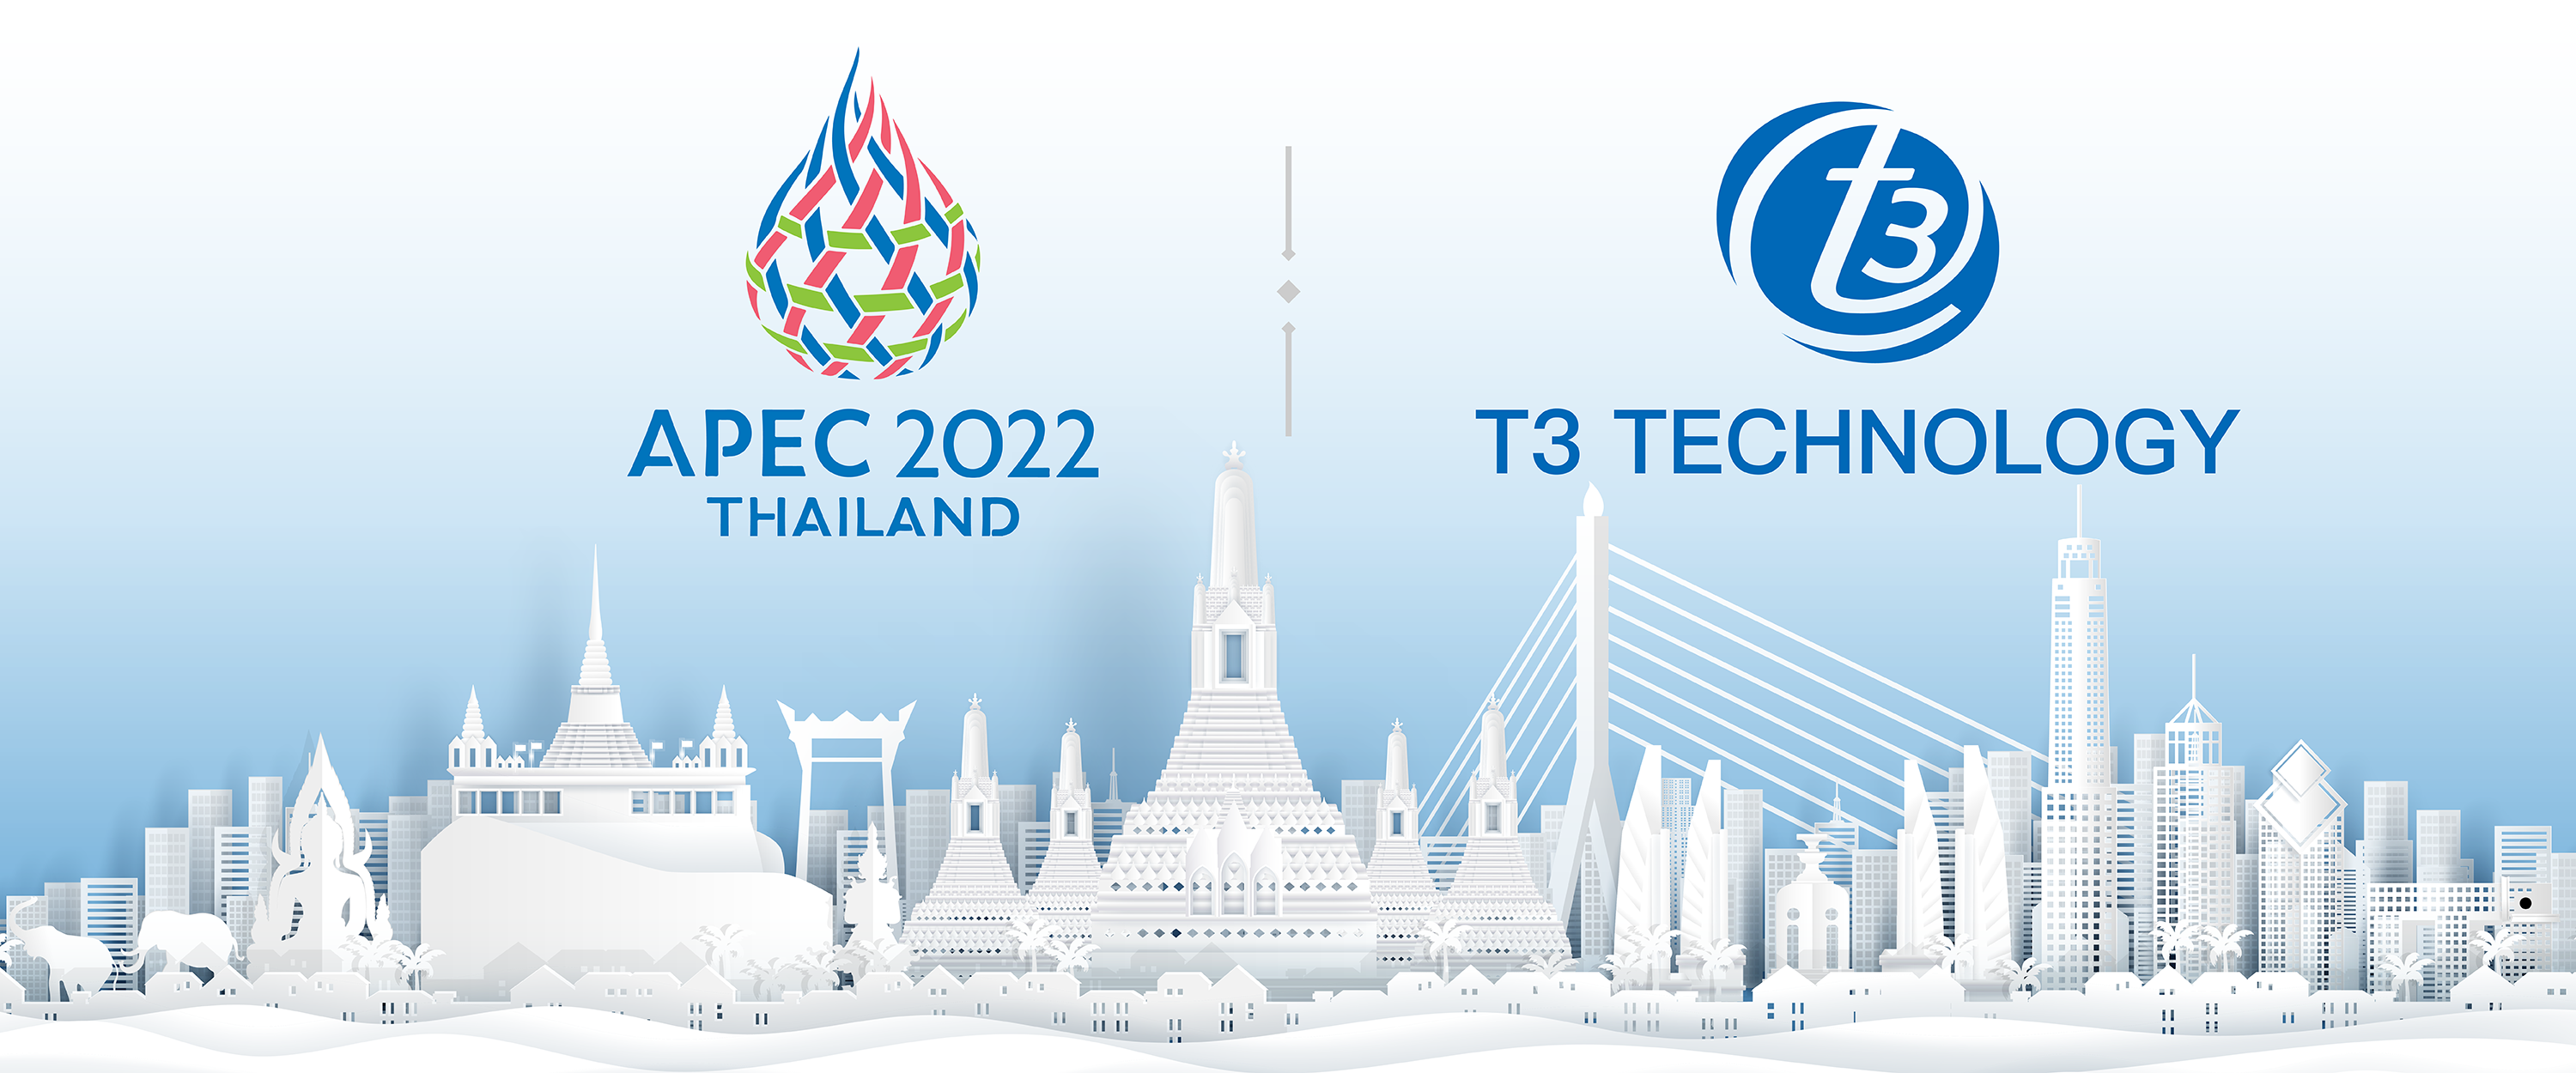 T3 Technology Supports Thailand APEC 2022 Summit